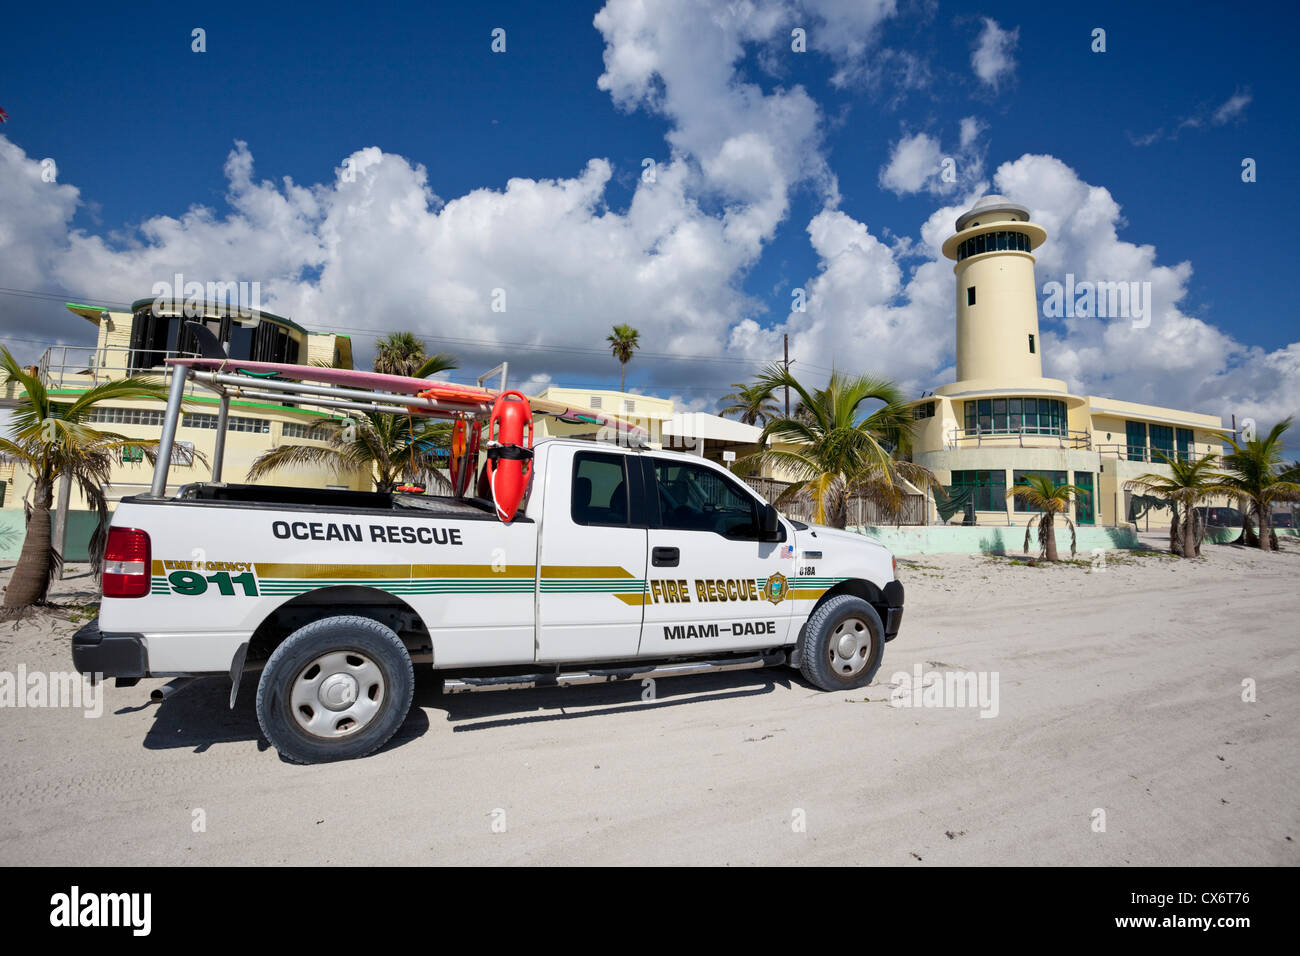 Ocean rescue pick-up truck on Haulover Beach, Miami-Dade County, Florida, USA Stock Photo